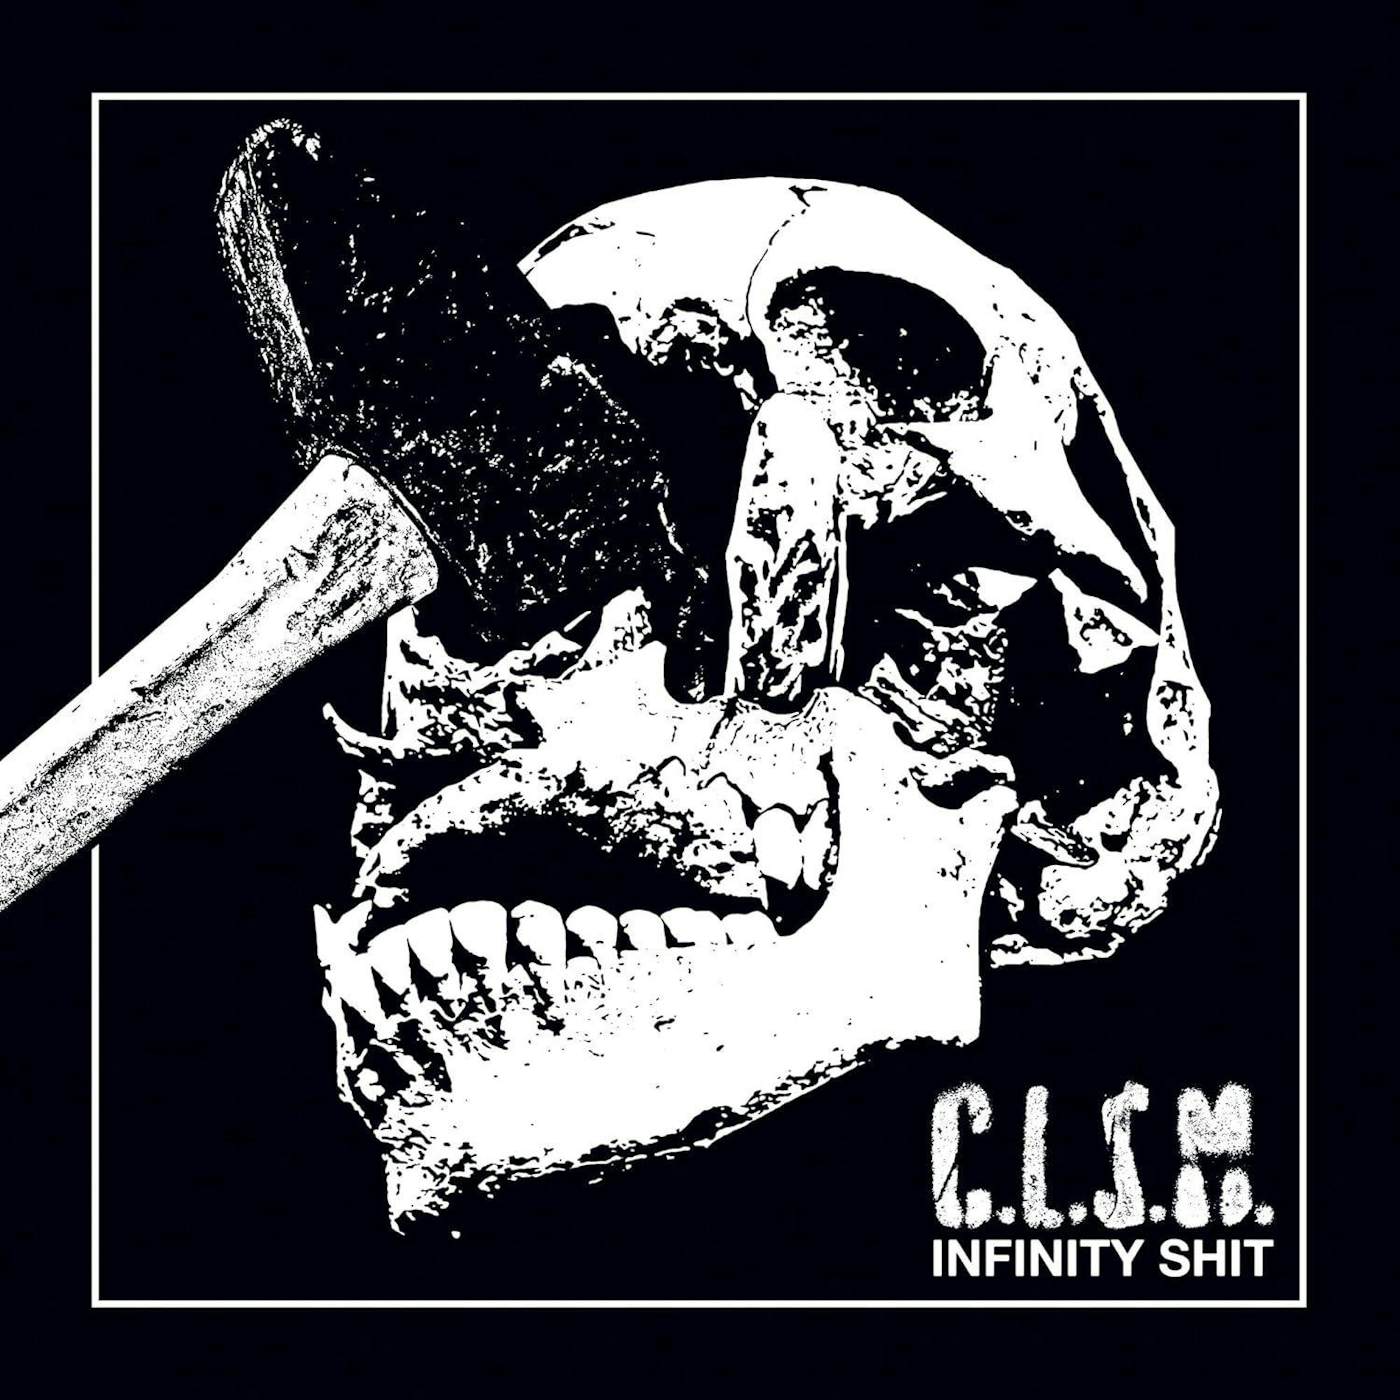 Coliseum C.L.S.M. Infinity Shit Vinyl Record